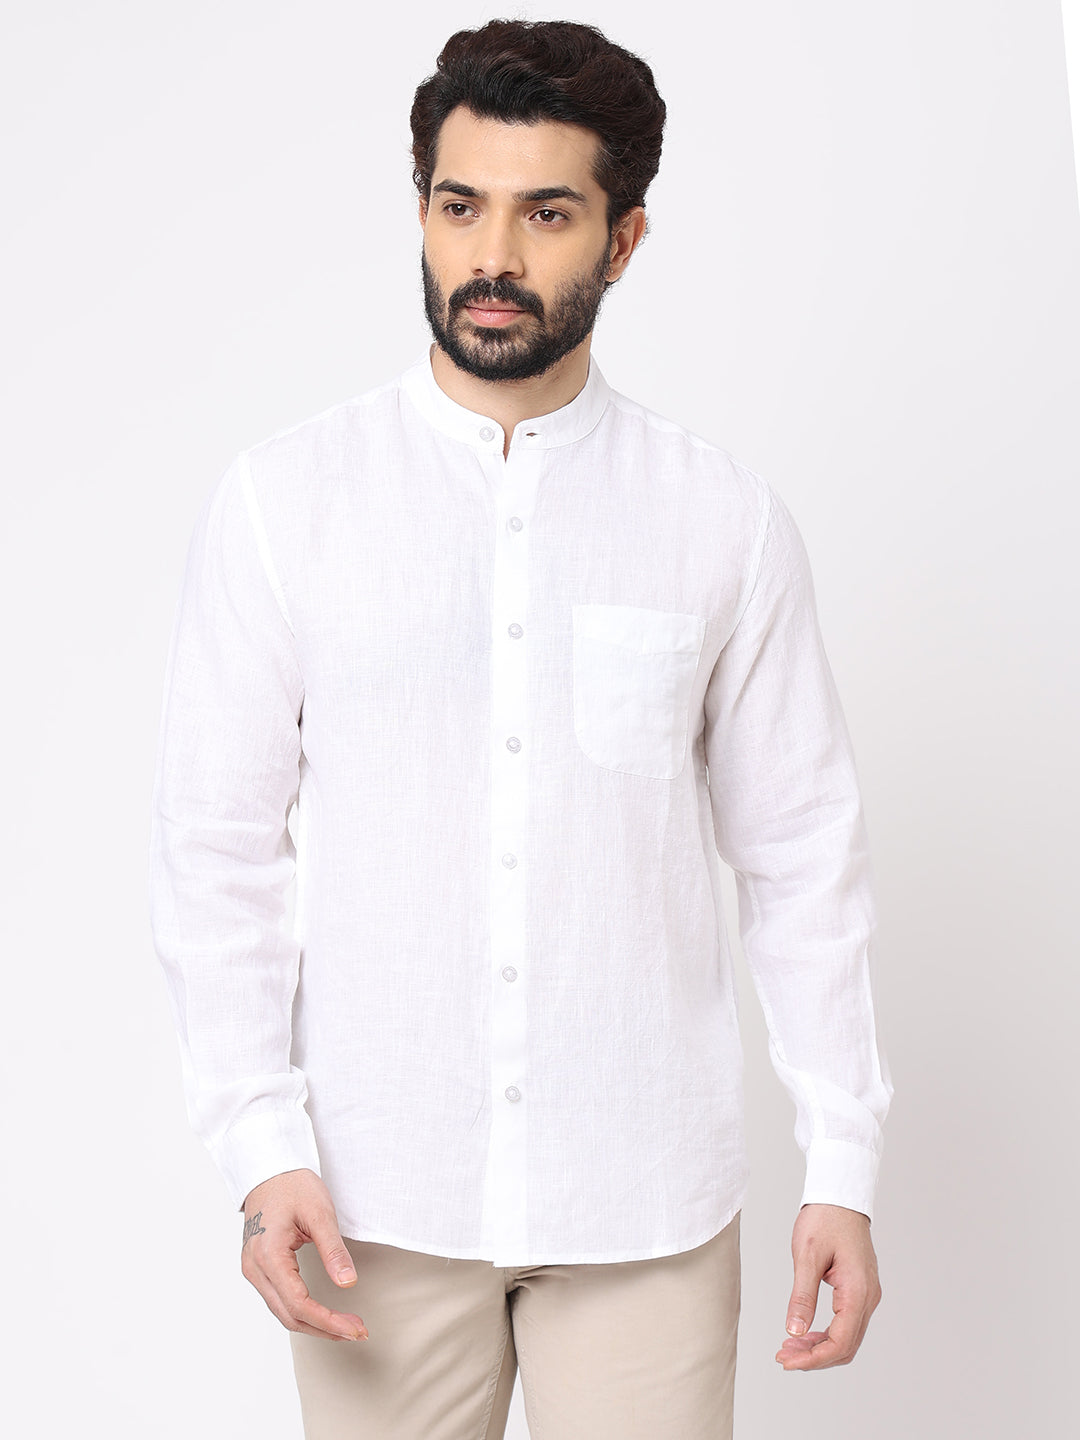 Men's 100% Linen White Band Collar Shirt Regular Fit Long Sleeve